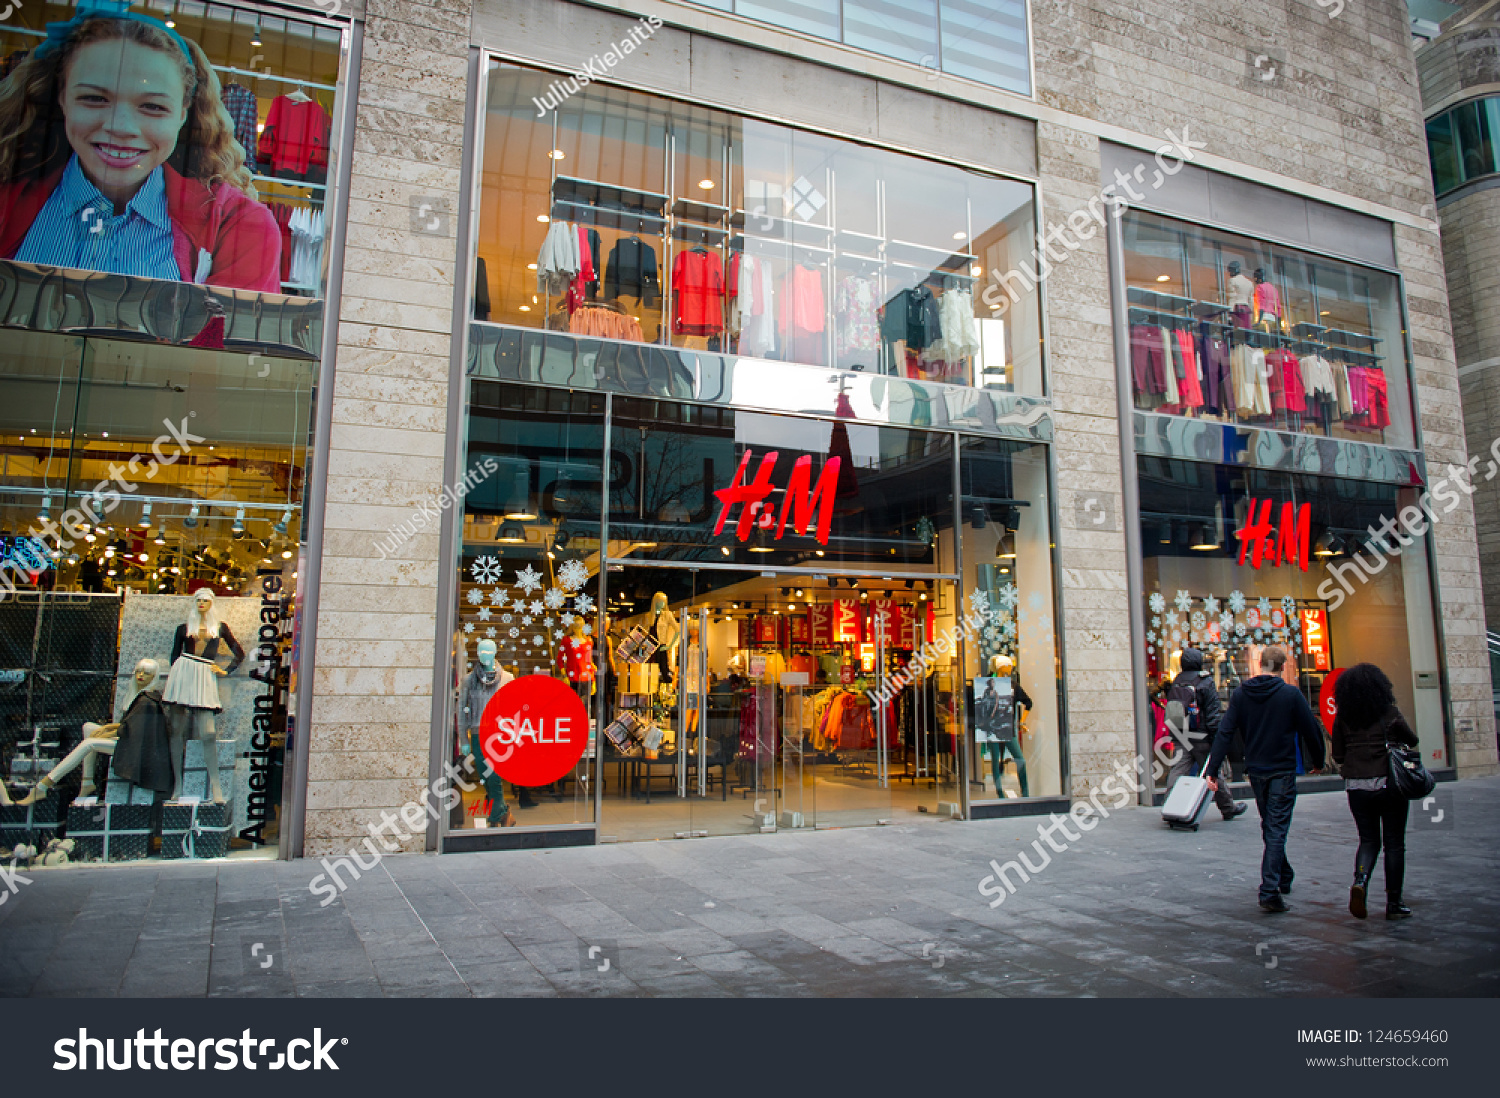 Liverpooldec 18 Hm Store On Dec Stock Photo 124659460 - Shutterstock